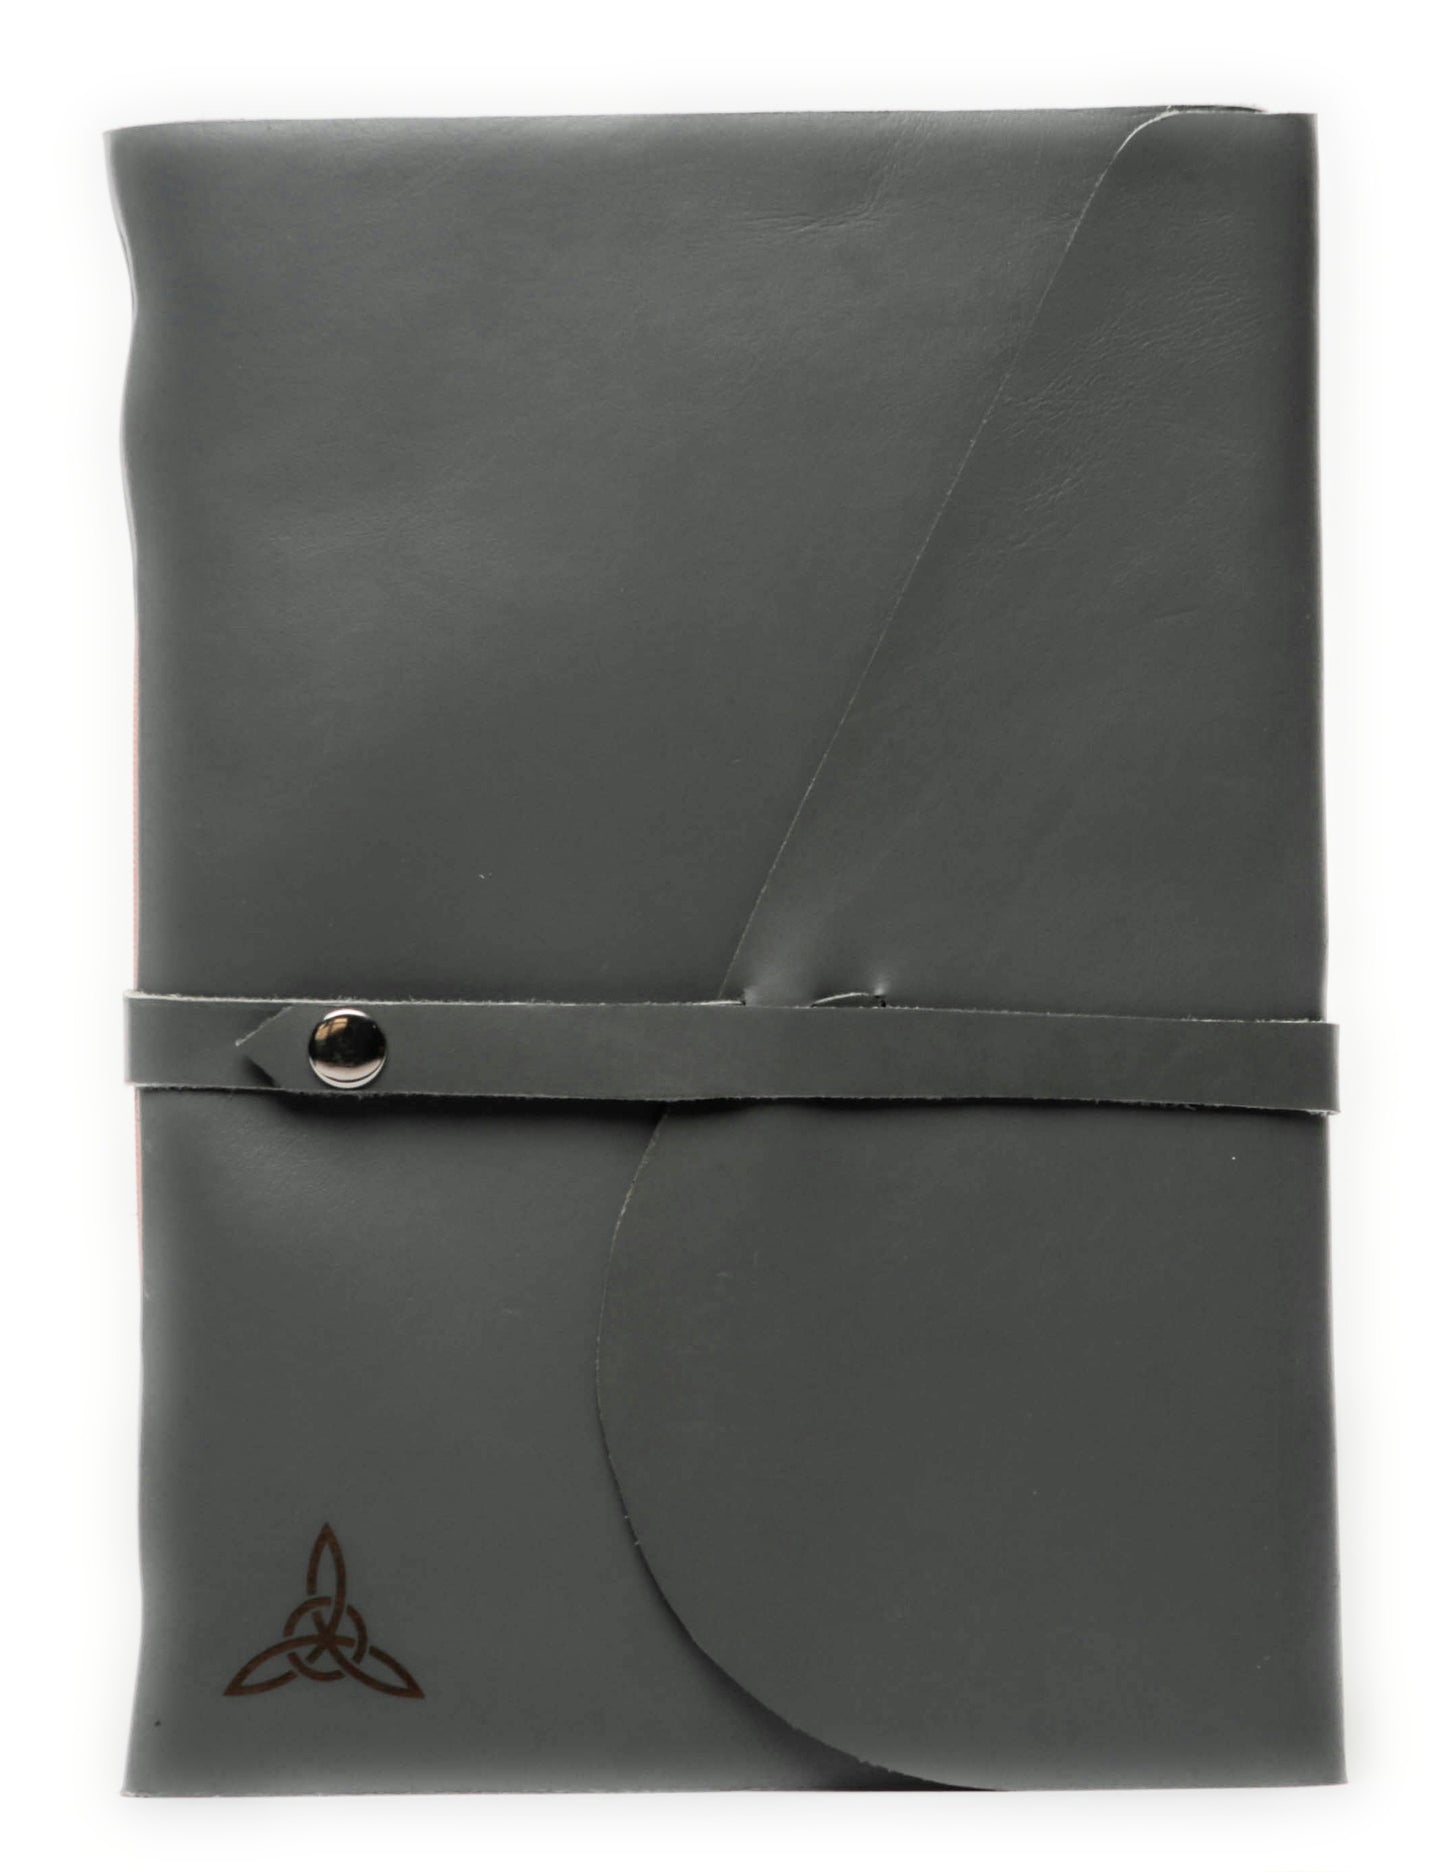 Handmade large leather Journal